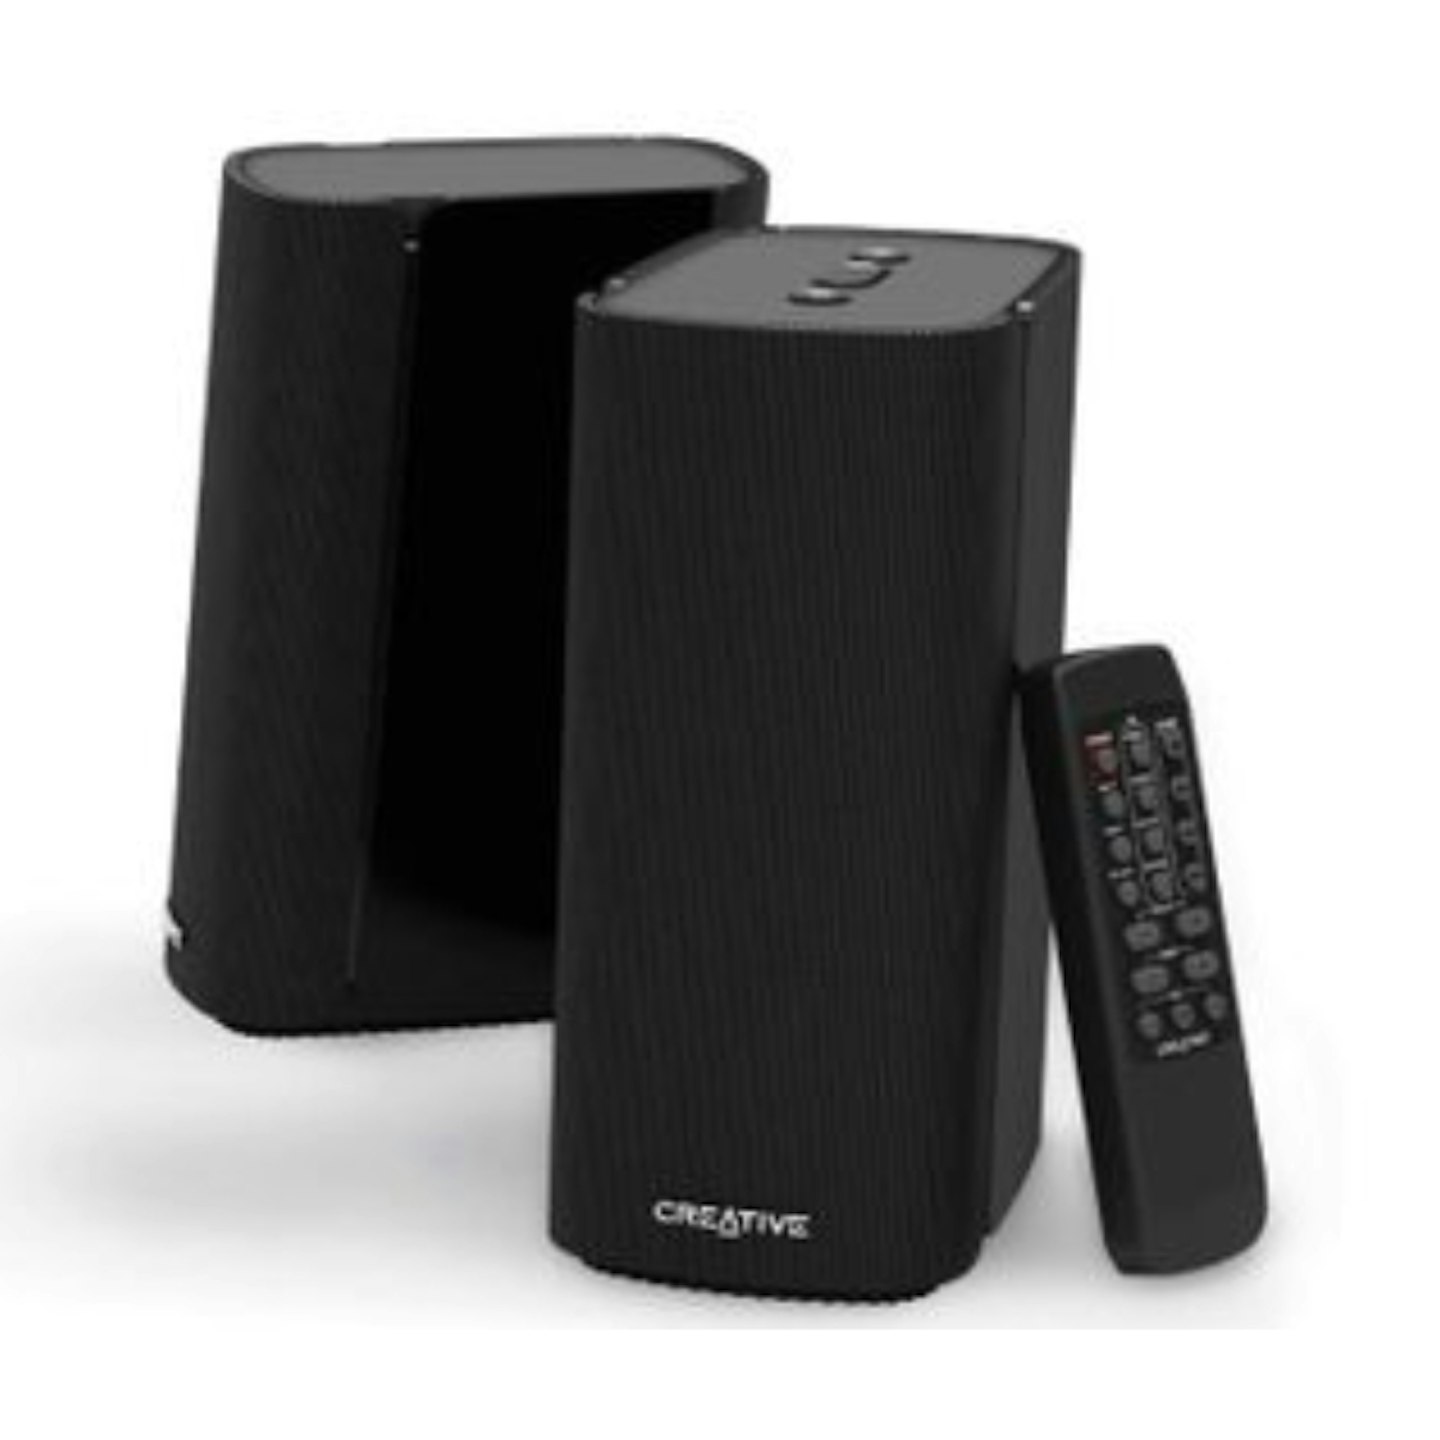 Creative T100 2.0 Compact Hi-Fi Speakers